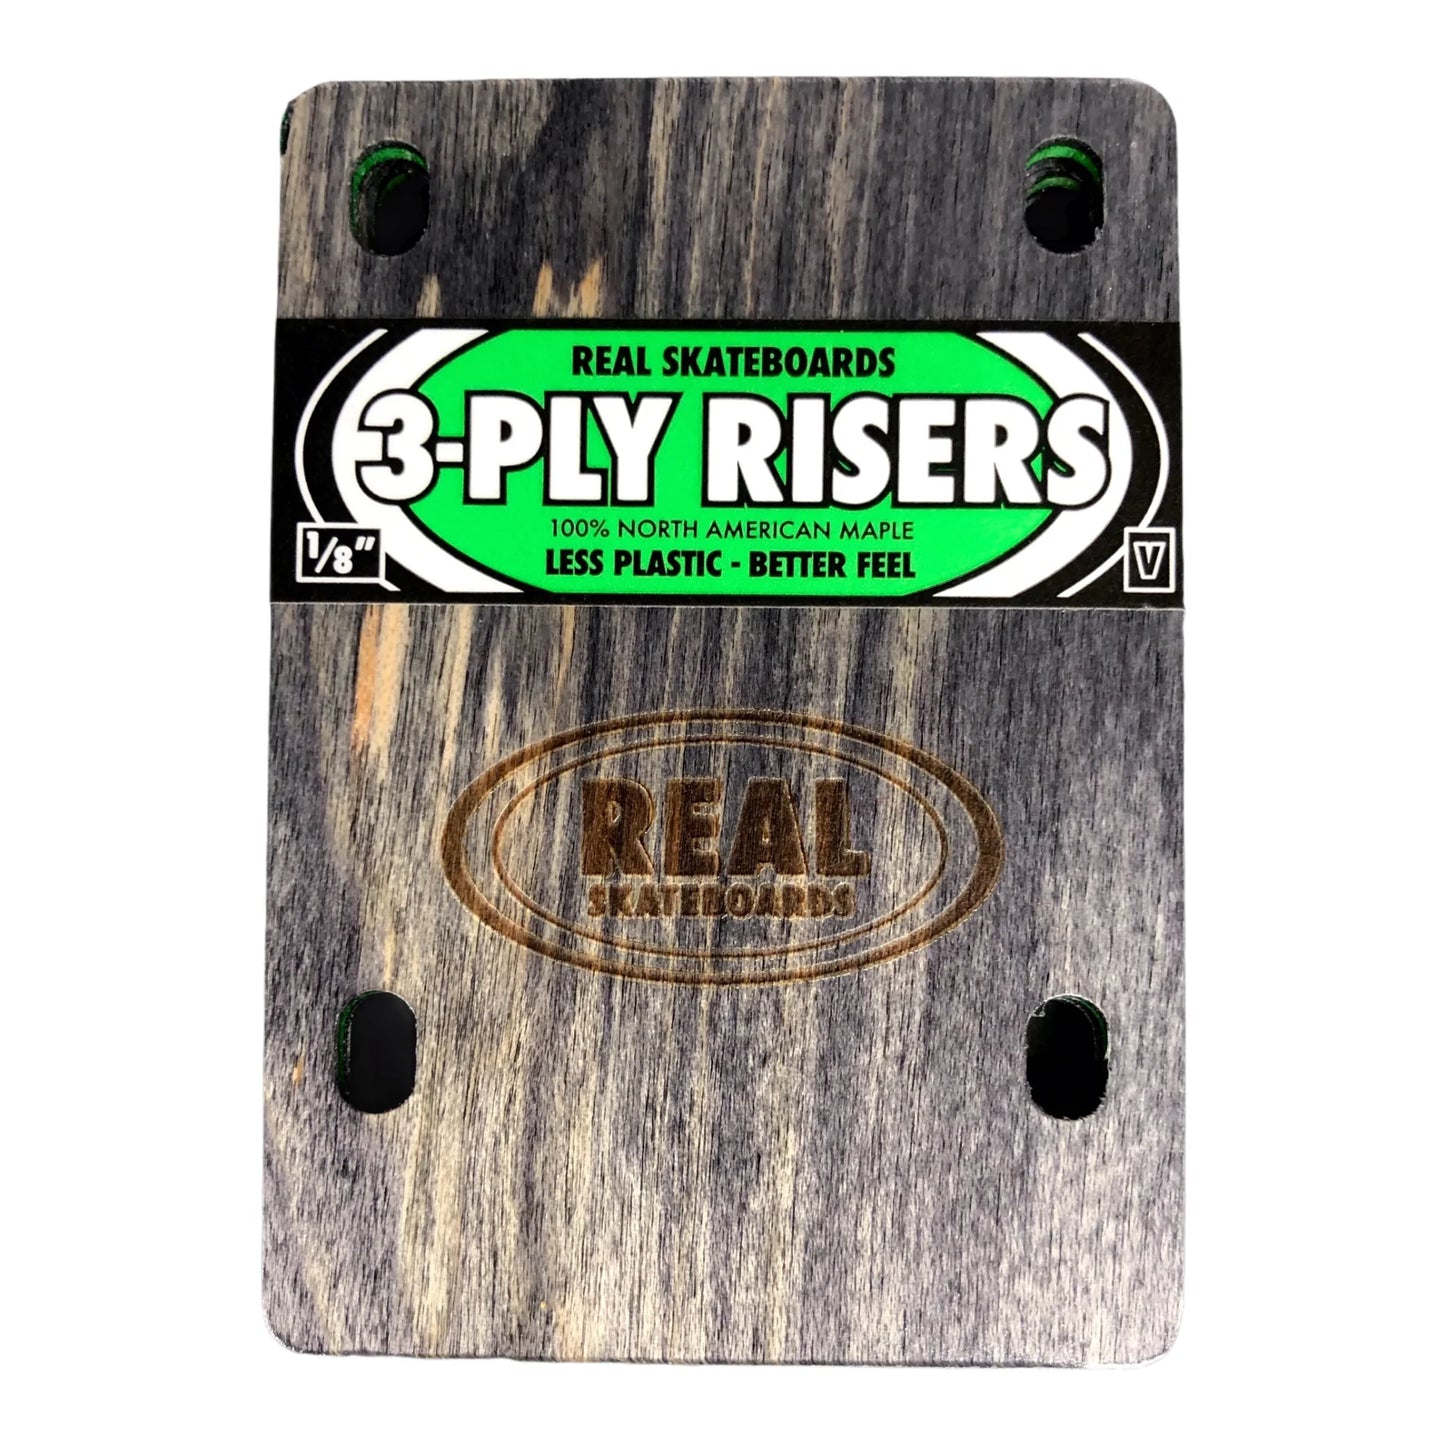 3-Ply Risers Venture